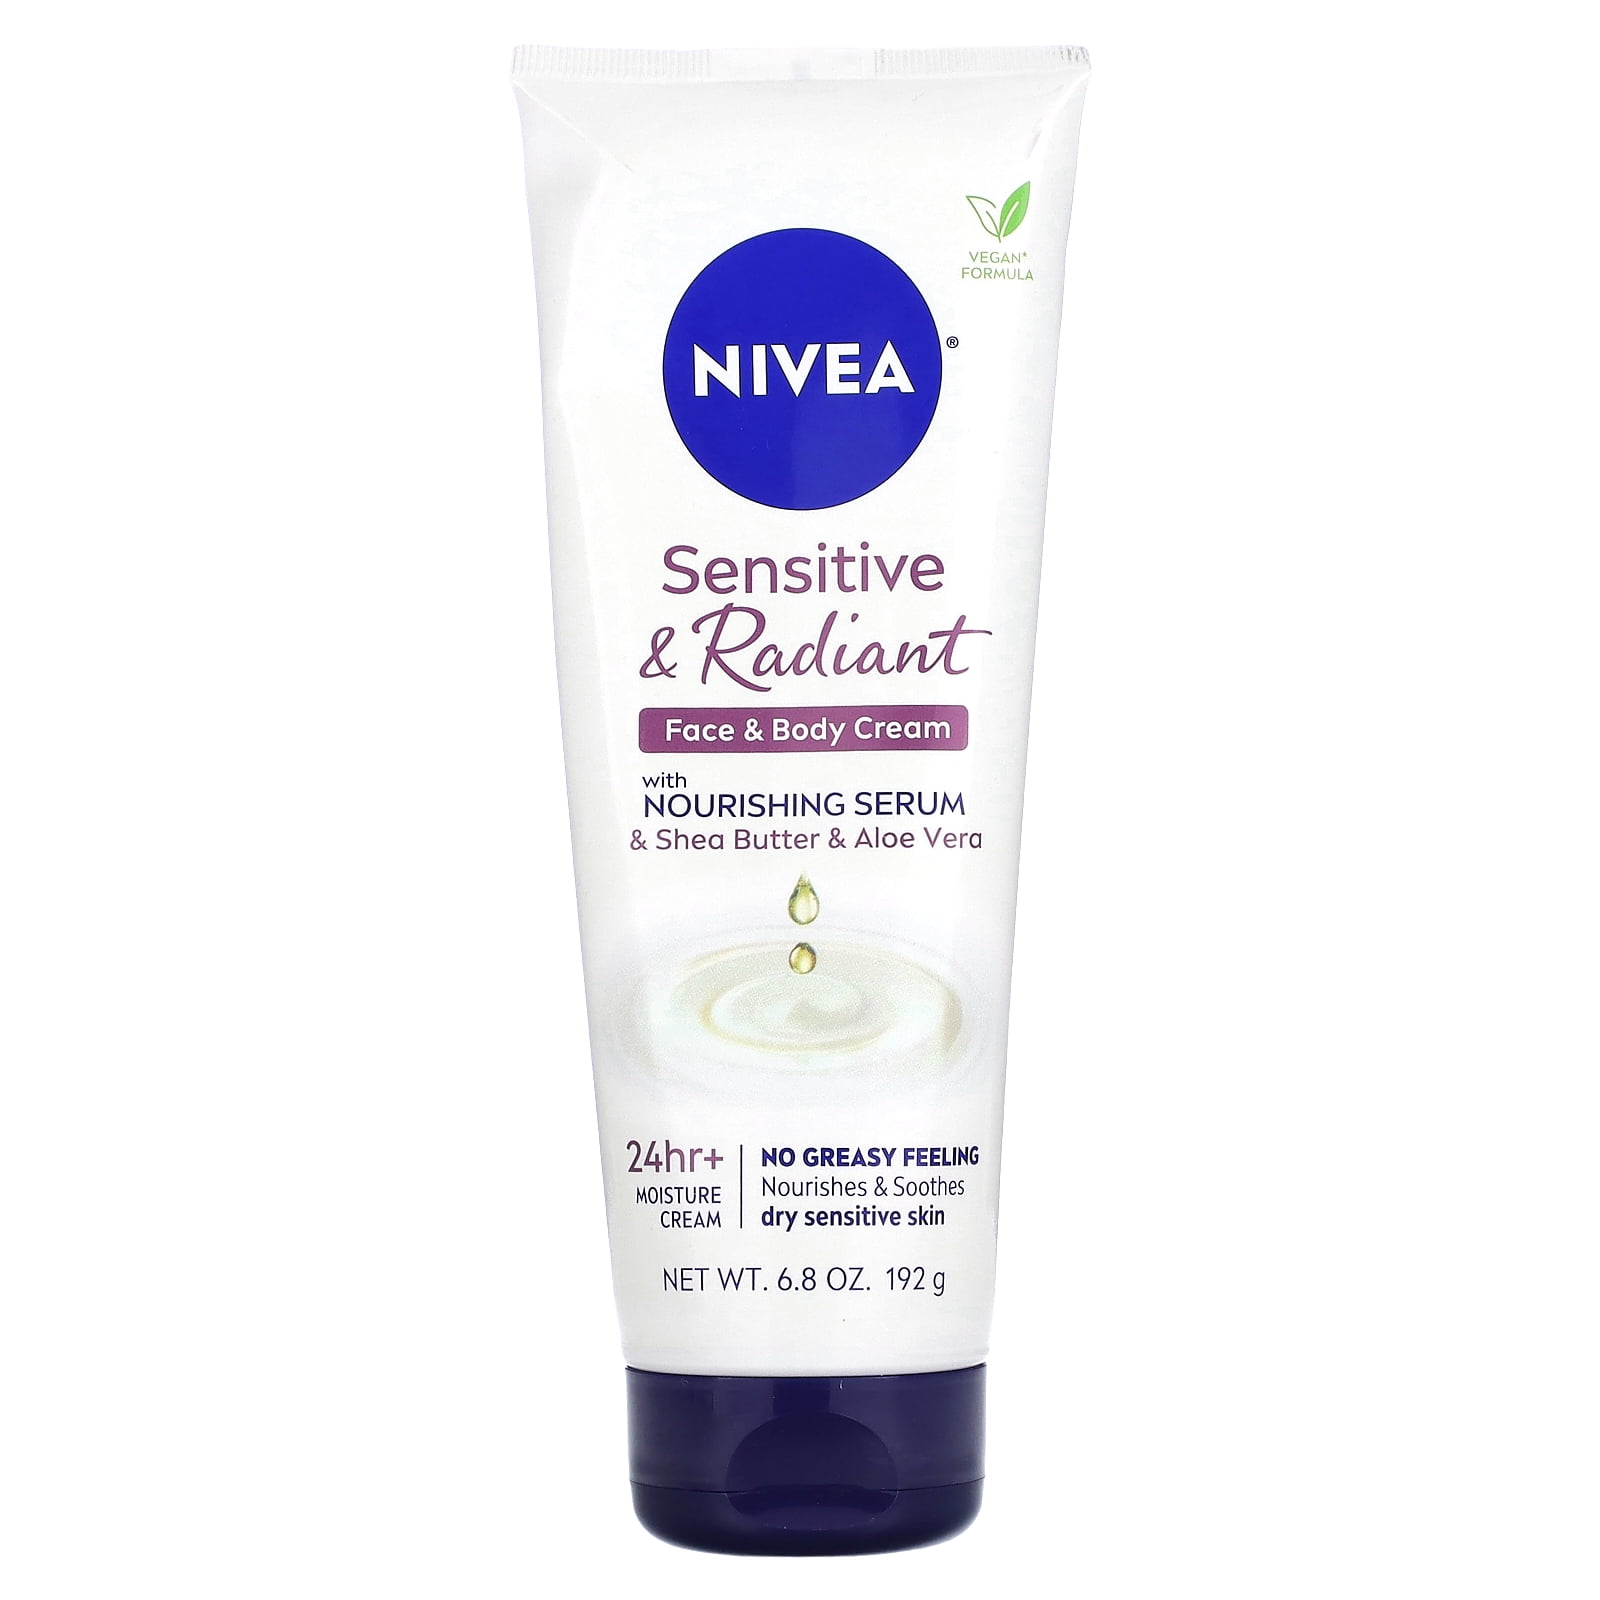 Nivea Sensitive & Radiance Face & Body Cream with Nourishing Serum